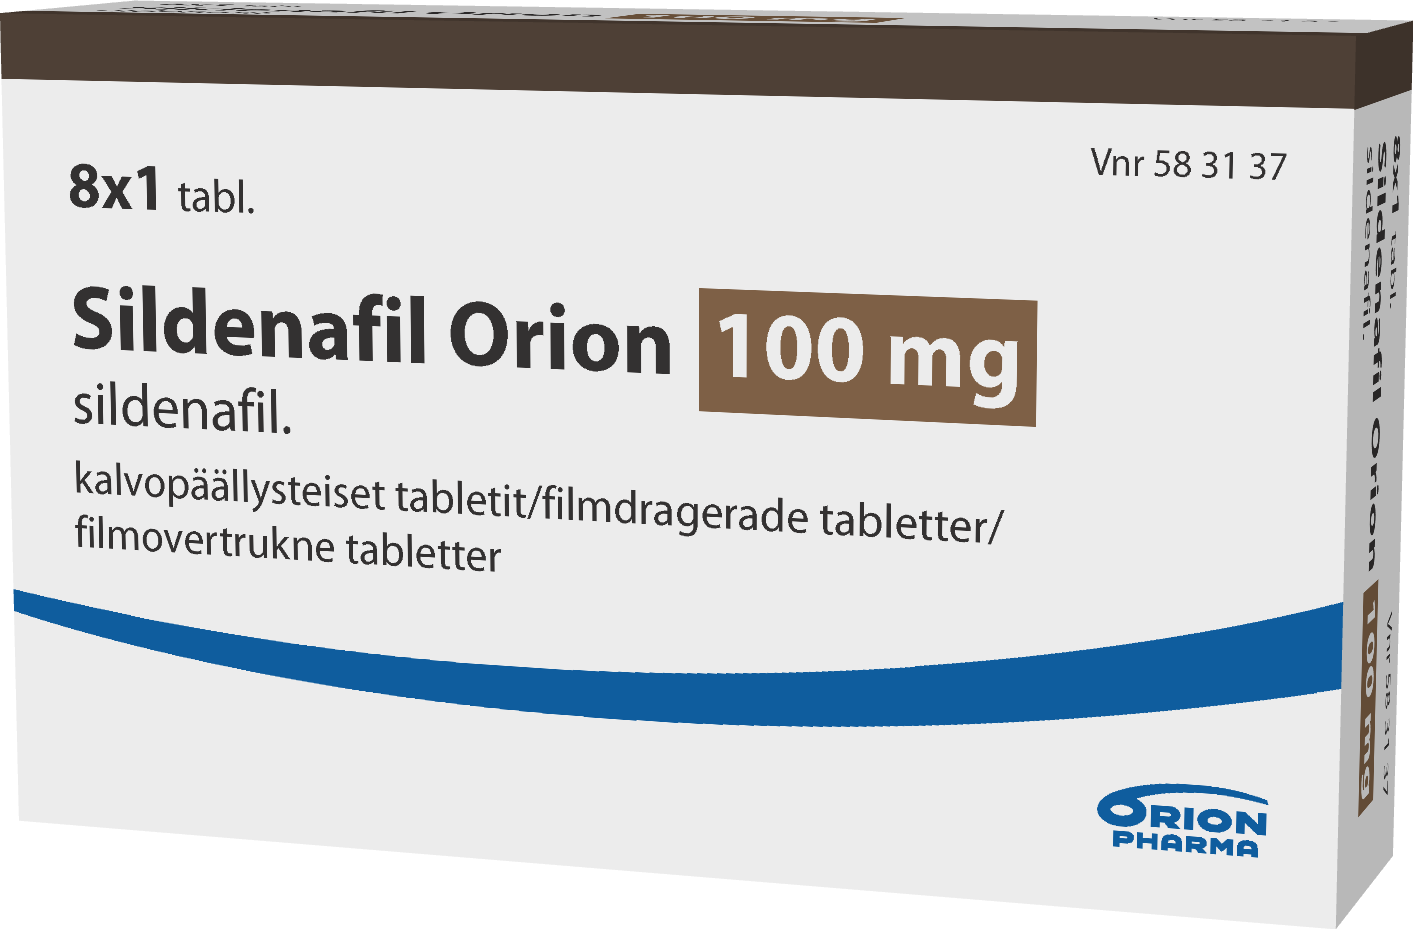 Köpa Sildenafil Orion 100mg utan recept i Sverige